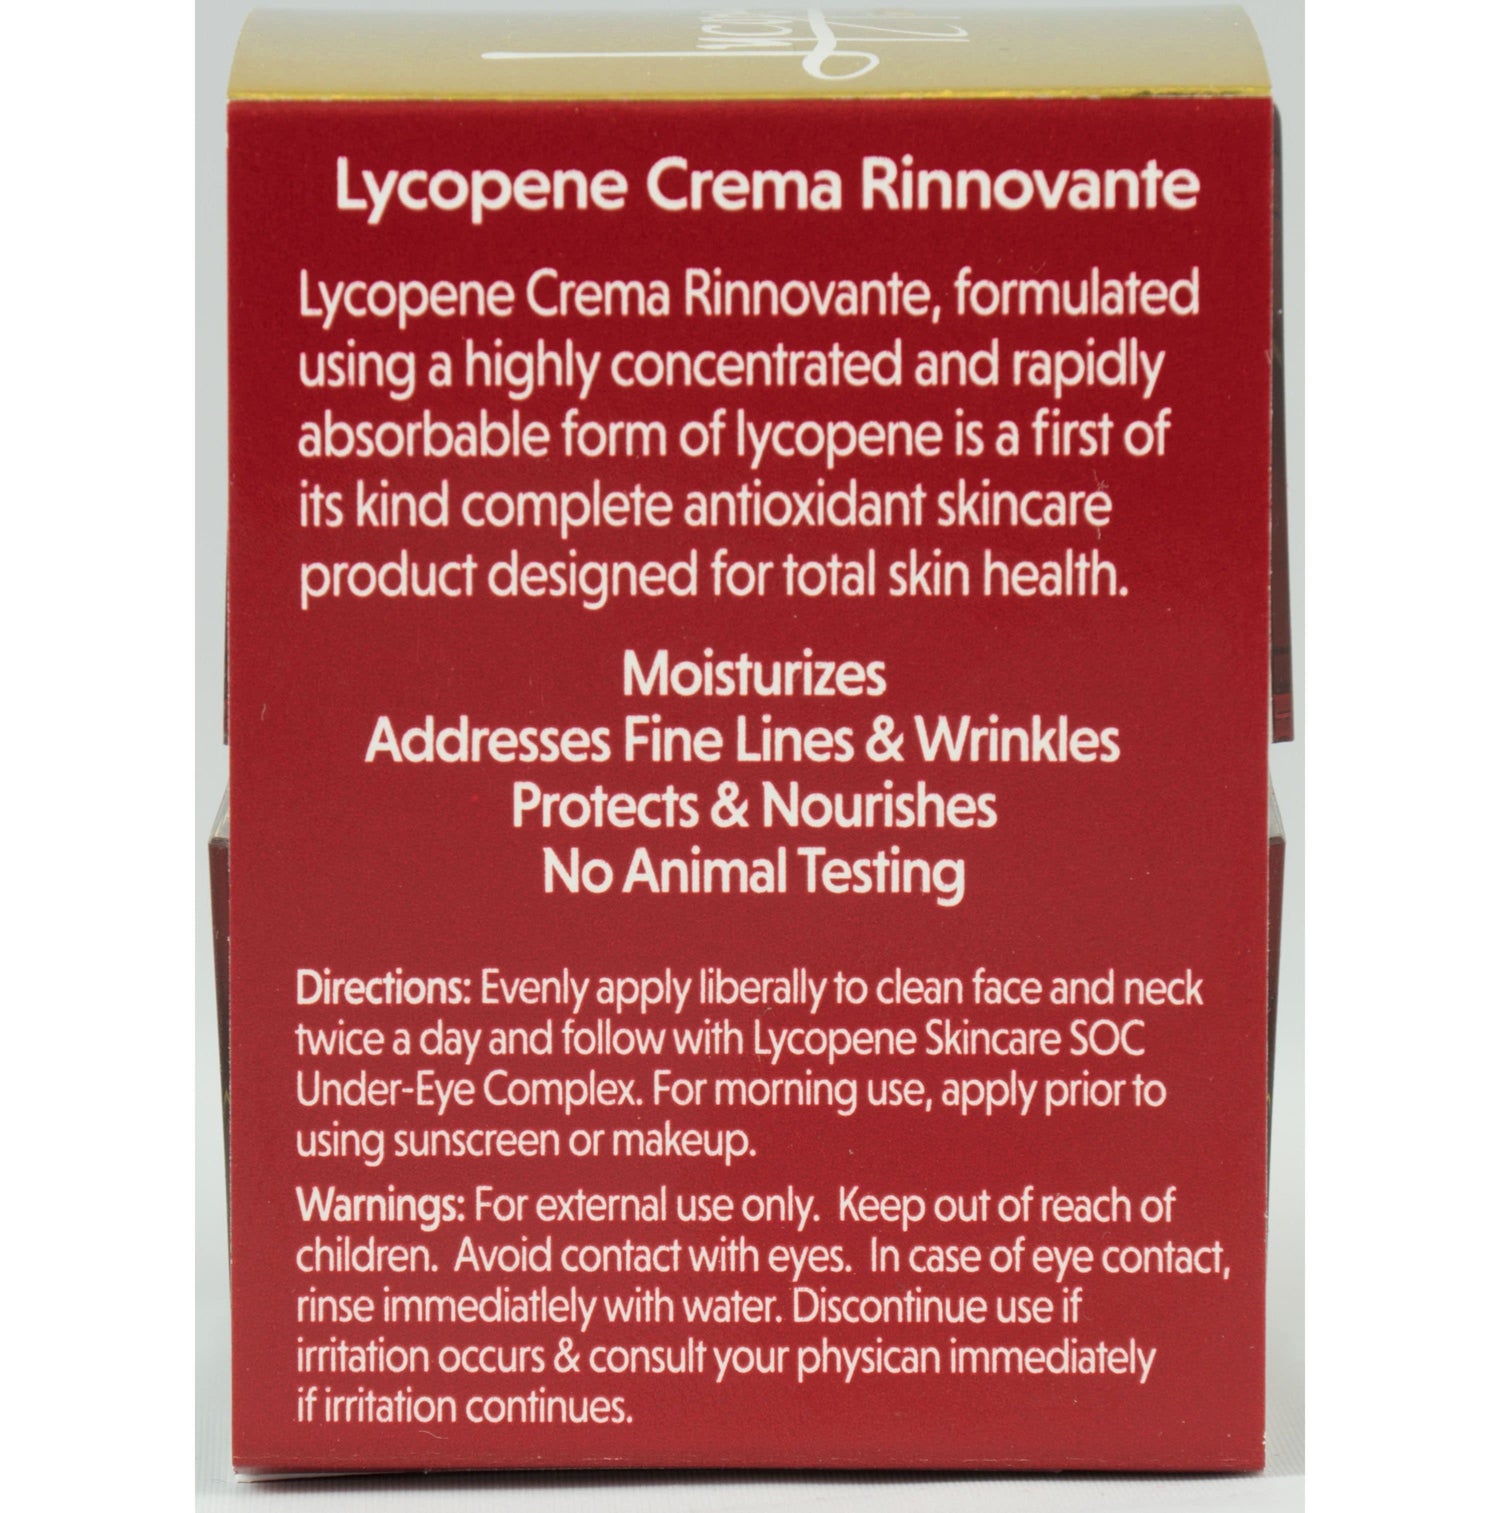 One 30 Ml Jar Lycopene Crema Rinnovante - Anti-Aging Cream, European Fashion Models Favorite with Astaxanthin, Hyaluronic Acid, with 20 Natural Organic Botanicals